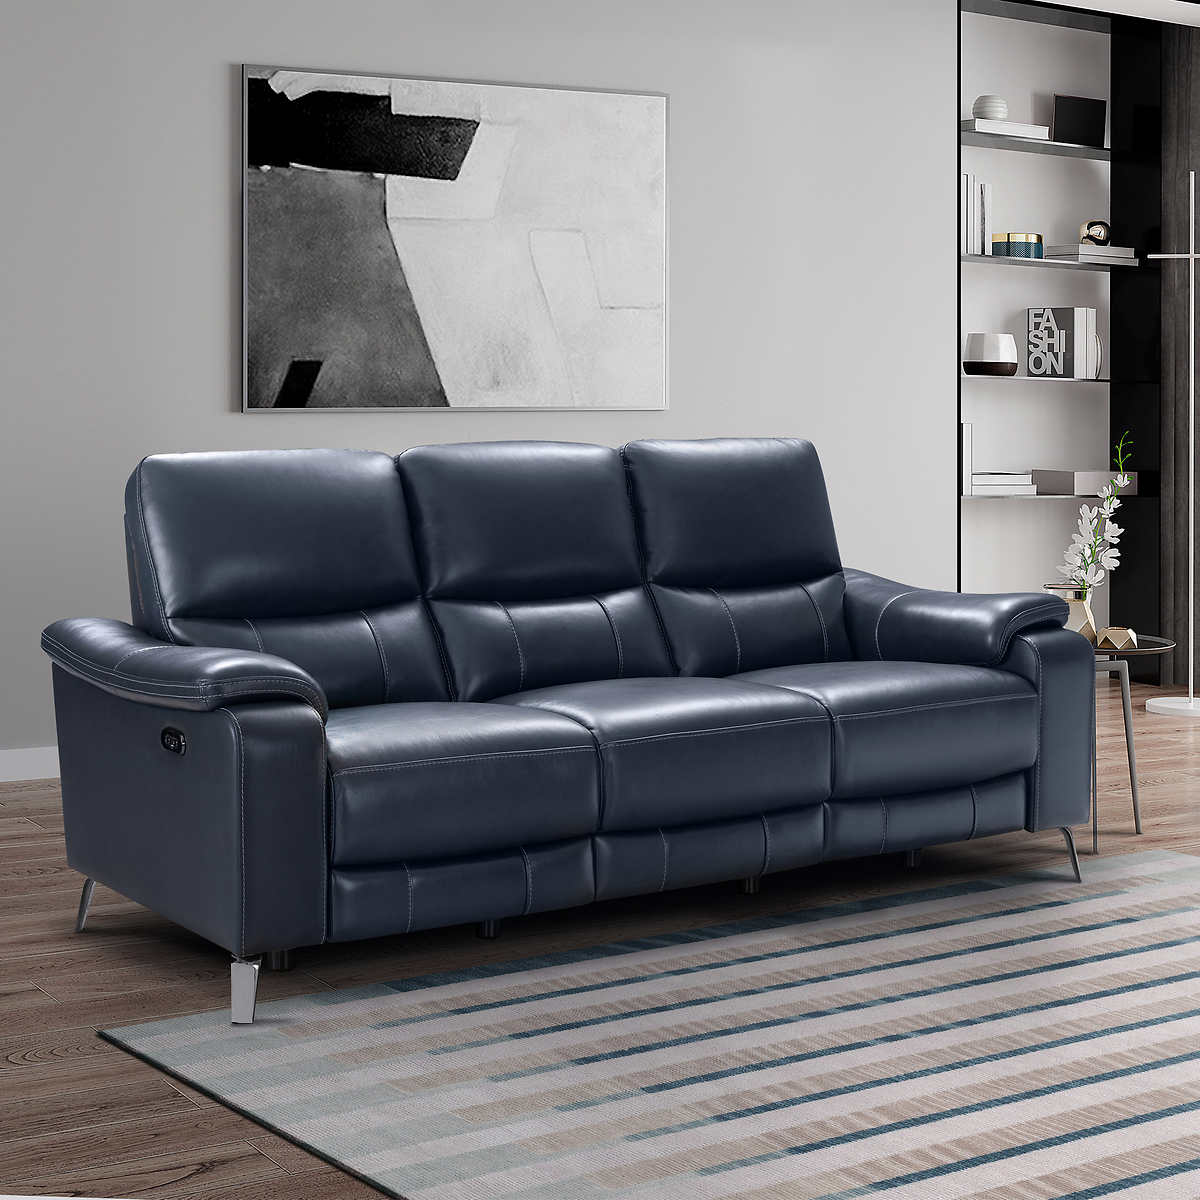 Indigo Bay Leather Power Reclining Sofa, Navy Blue Leather Reclining Living Room Set